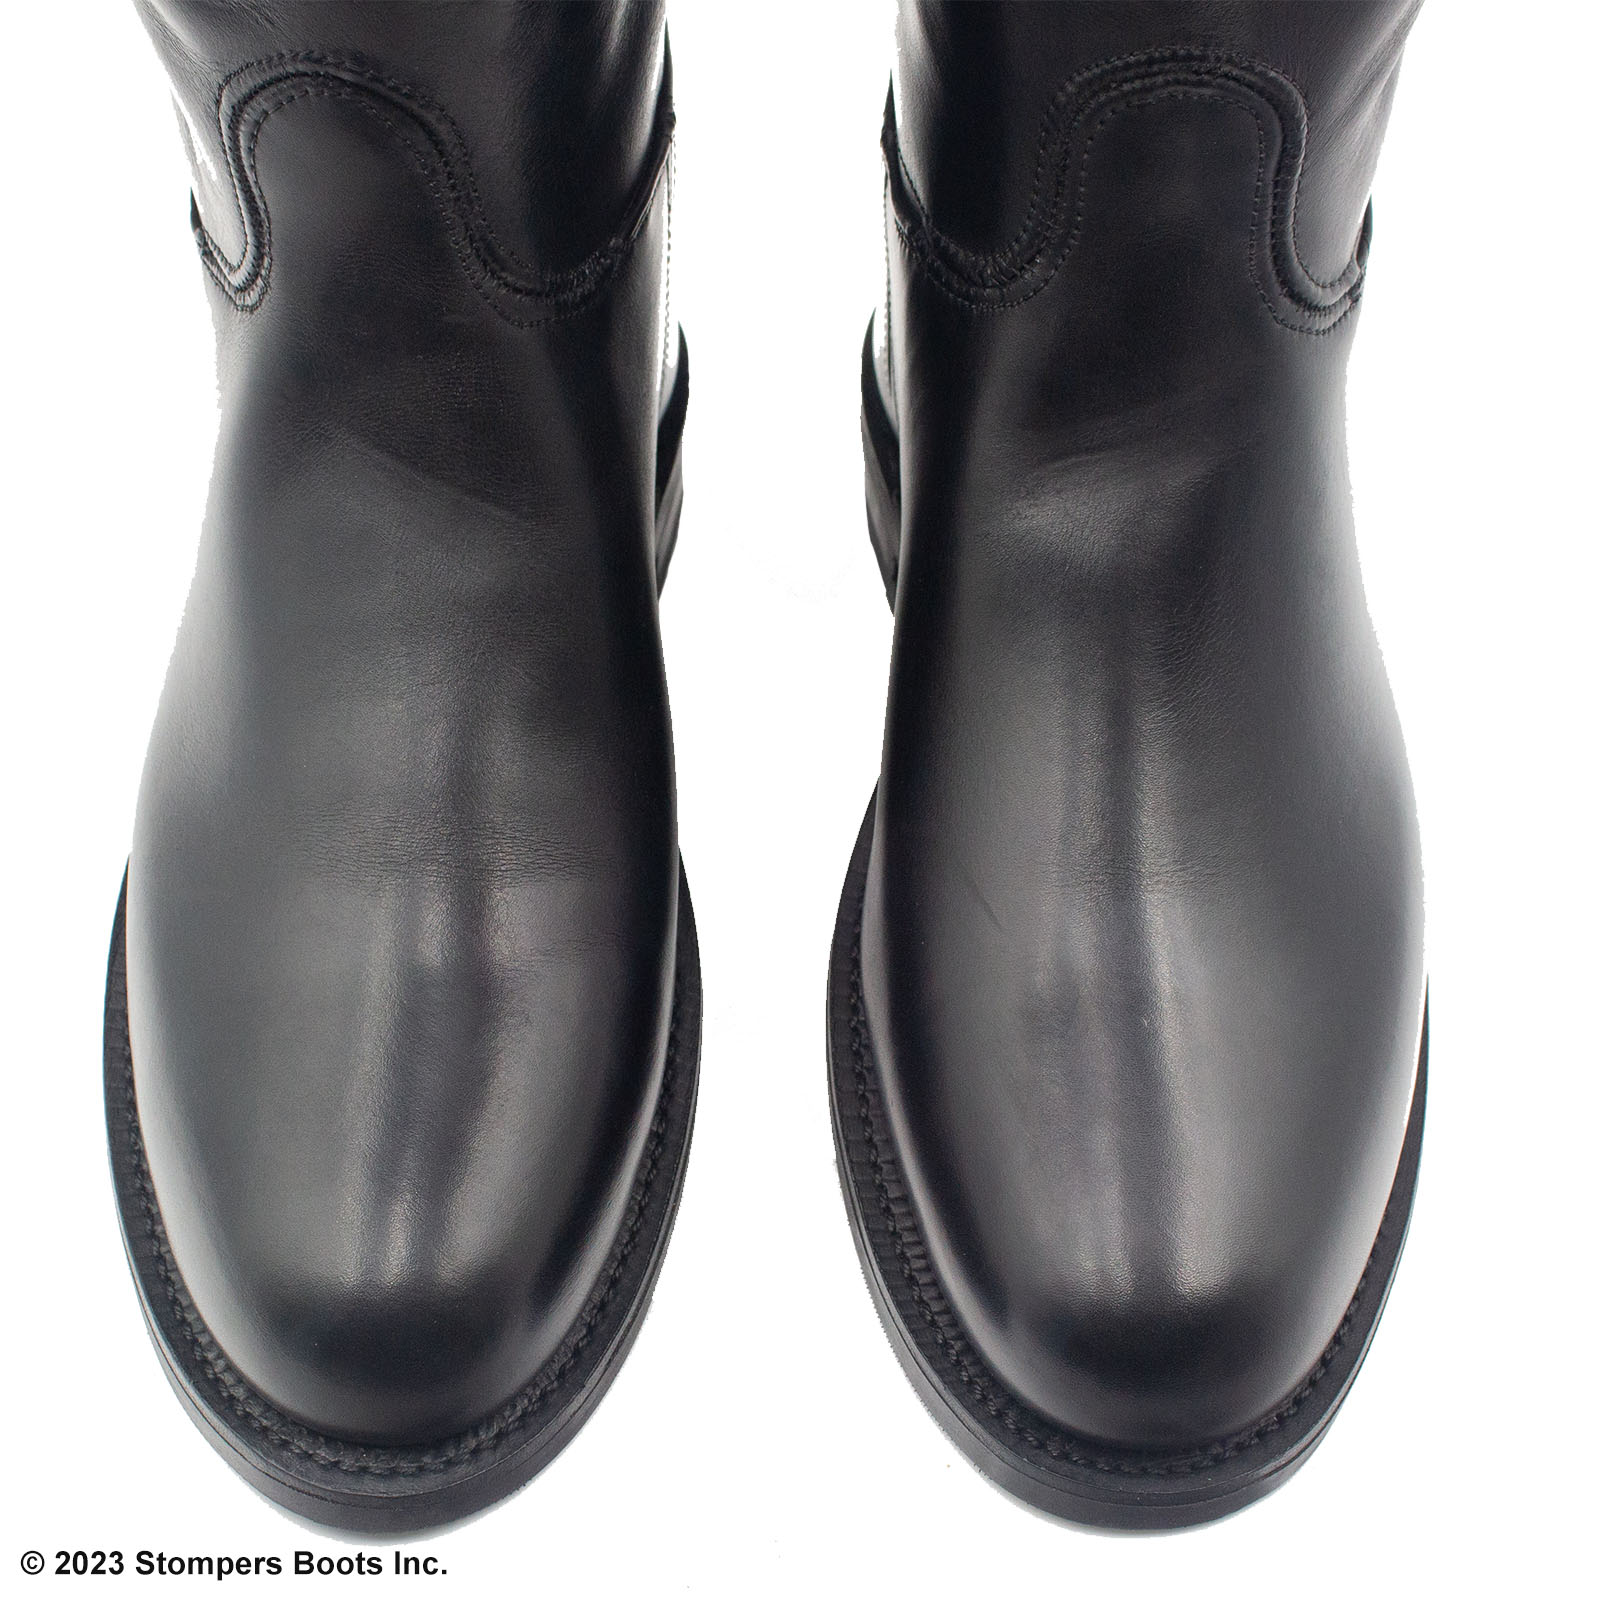 Dehner Custom Black French Calf Leather Dress Patrol Boots Size 9 E ...